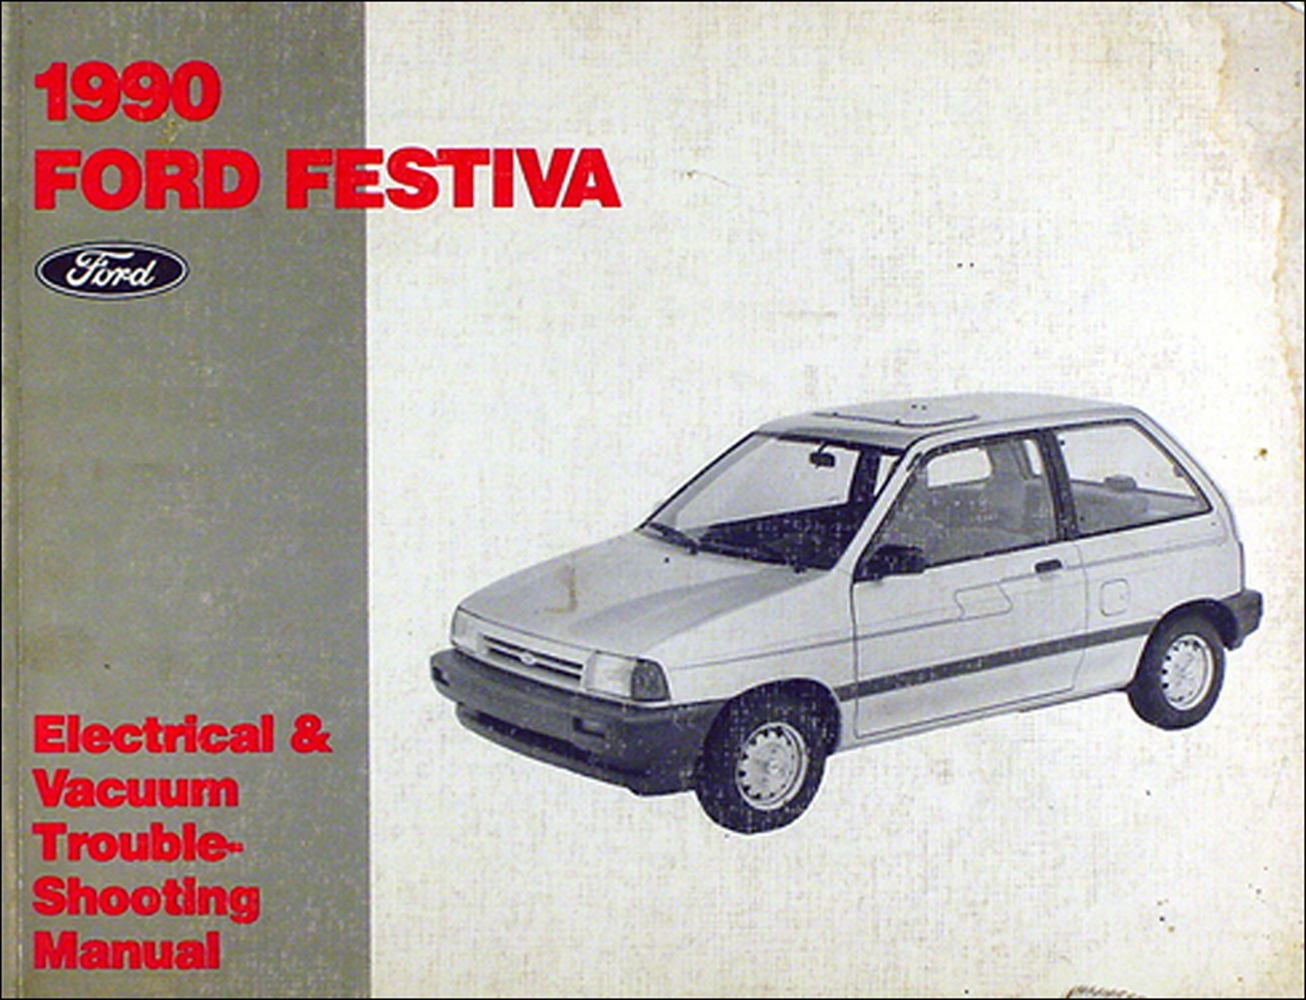 1990 Ford Festiva Original Electrical & Vacuum Troubleshooting Manual